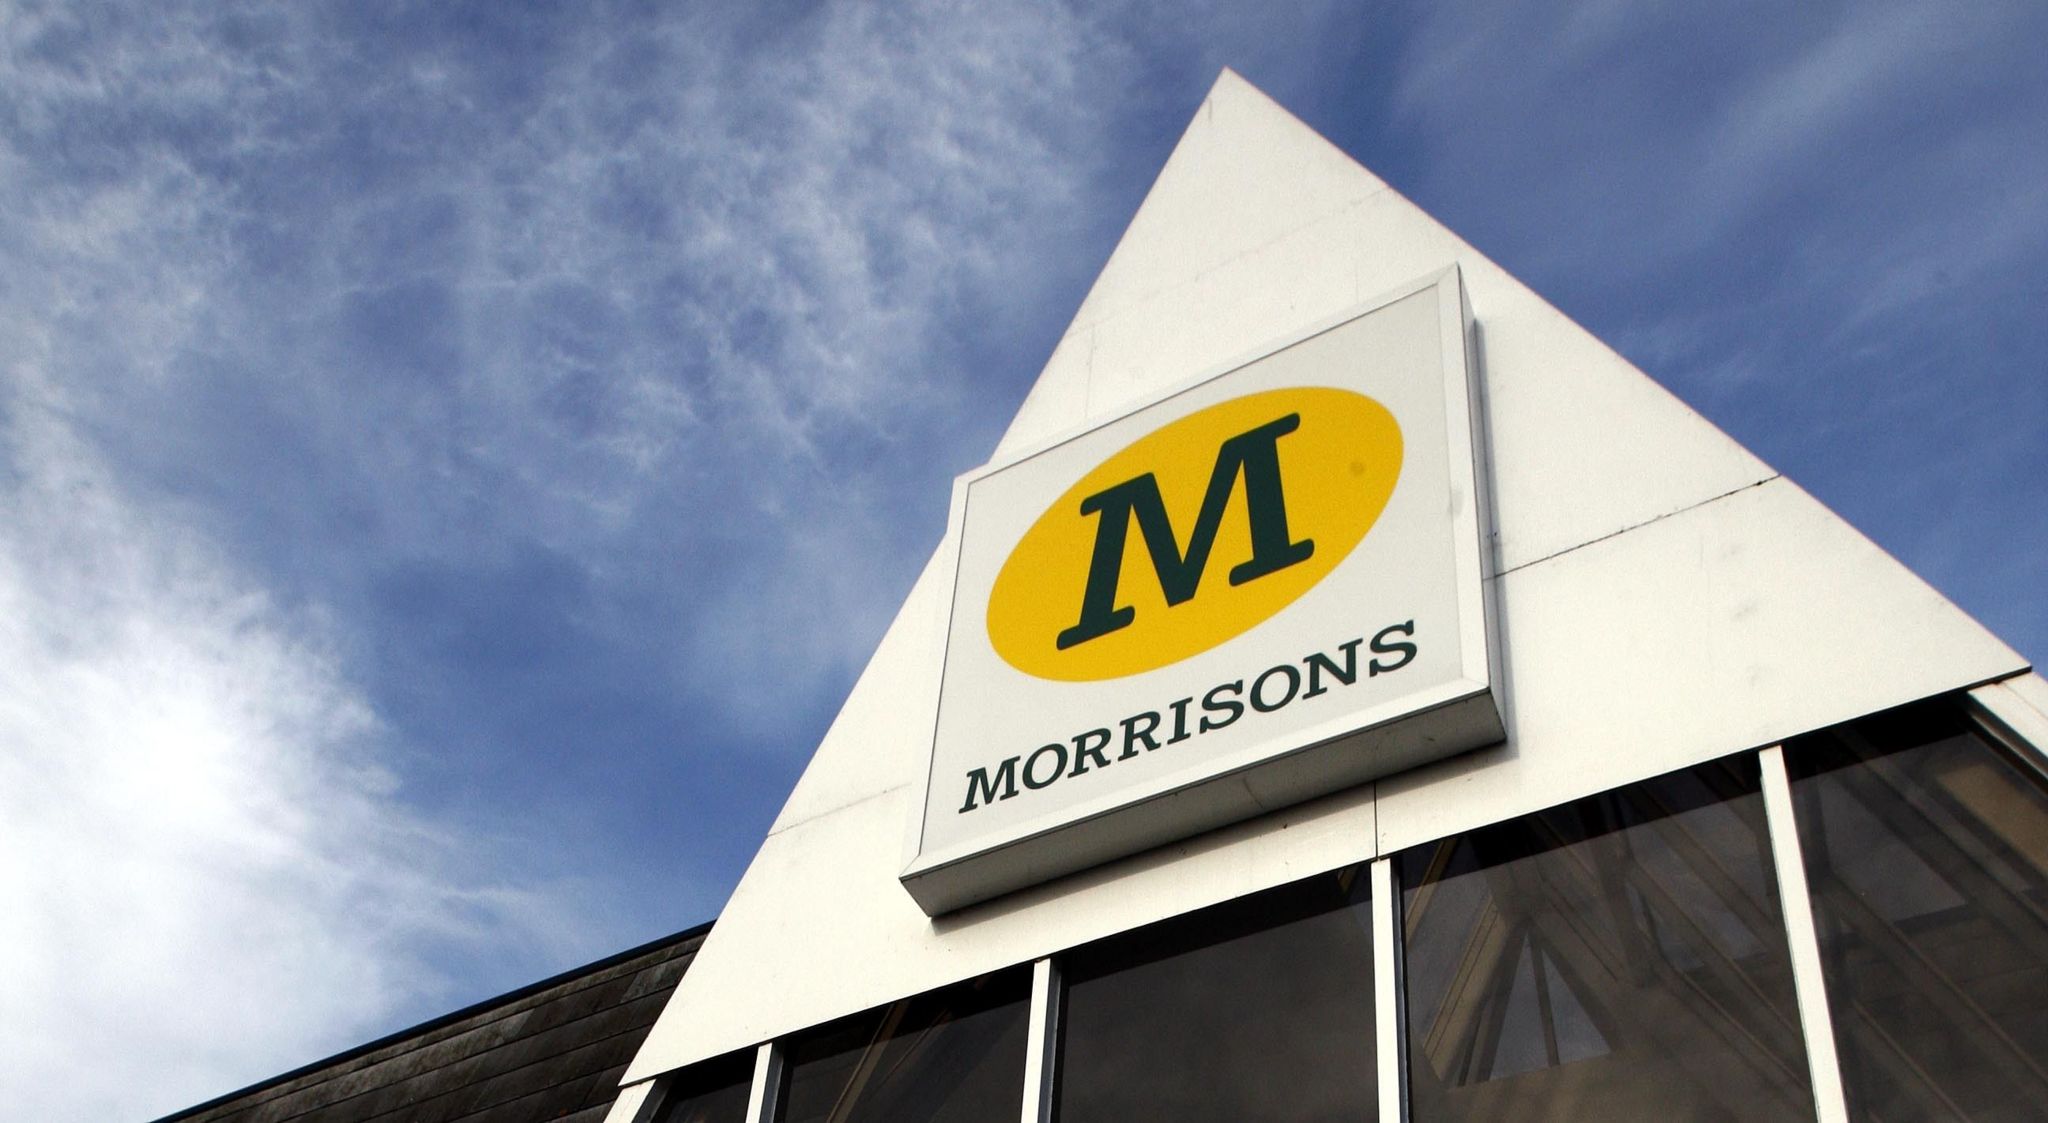 Stock image of Morrisons supermarket